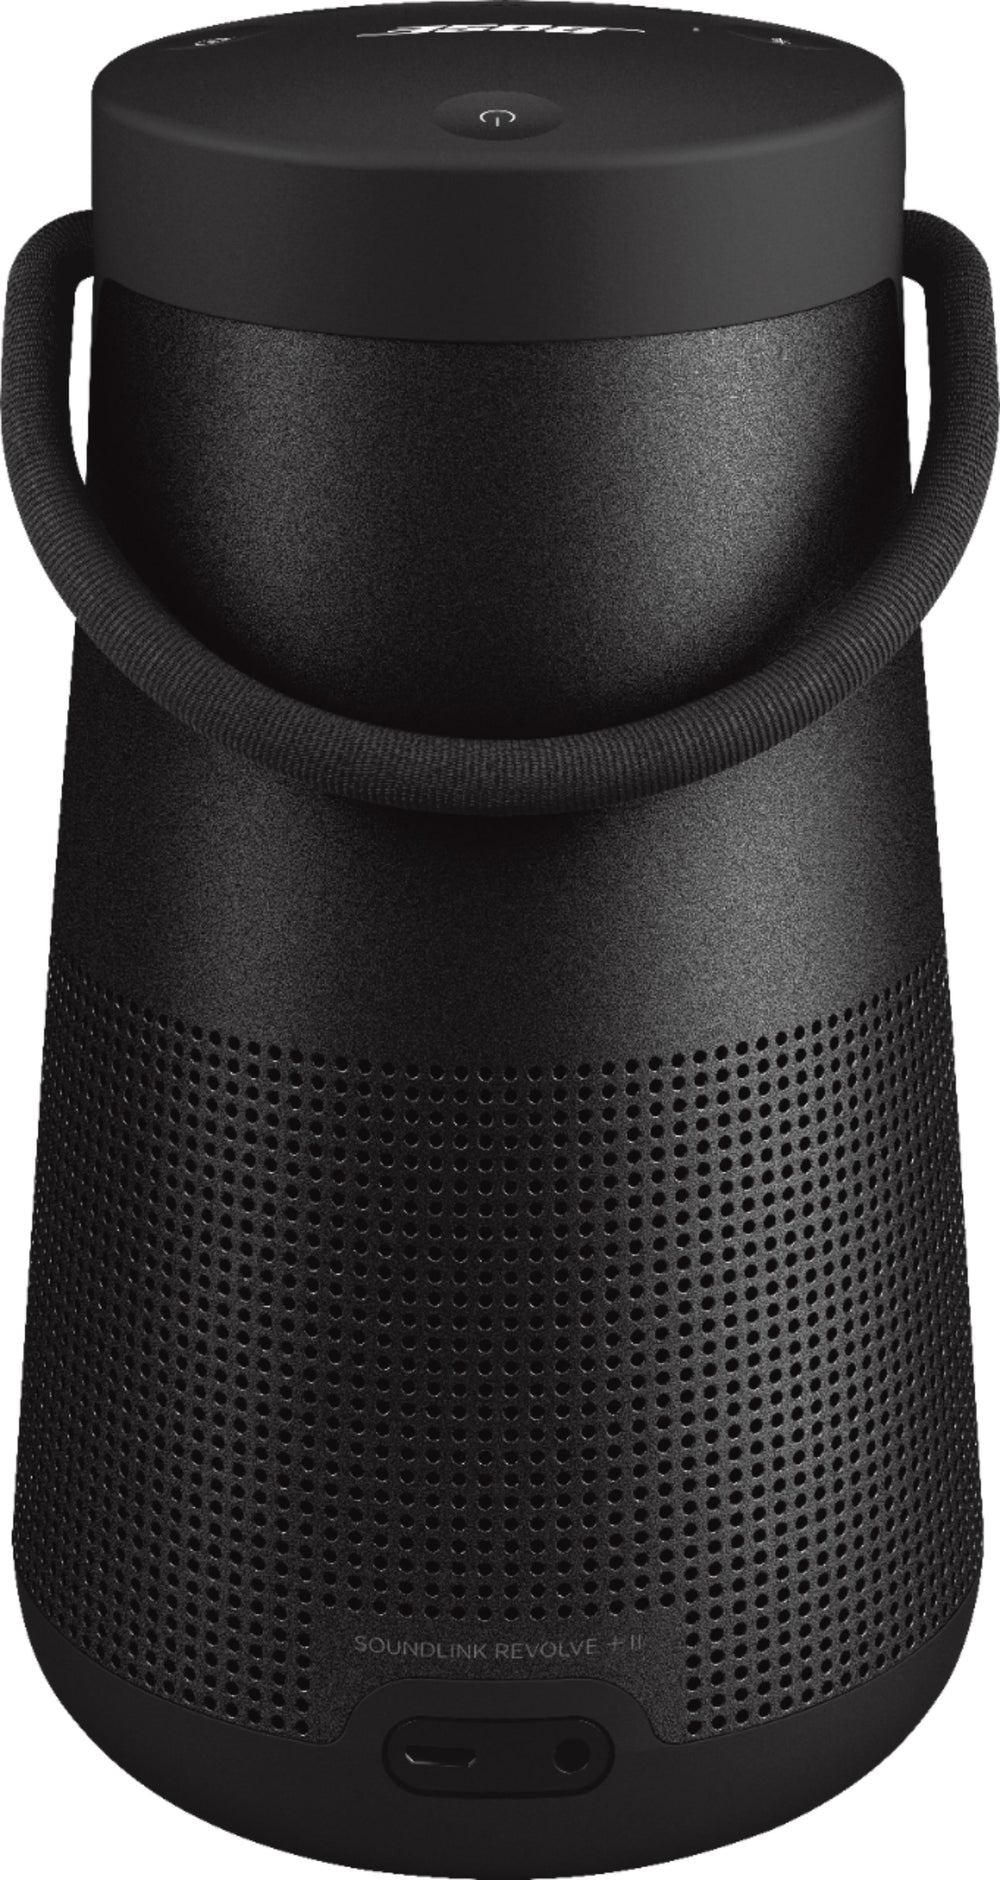 Bose - SoundLink Revolve+ II Portable Bluetooth Speaker - Triple Black_1